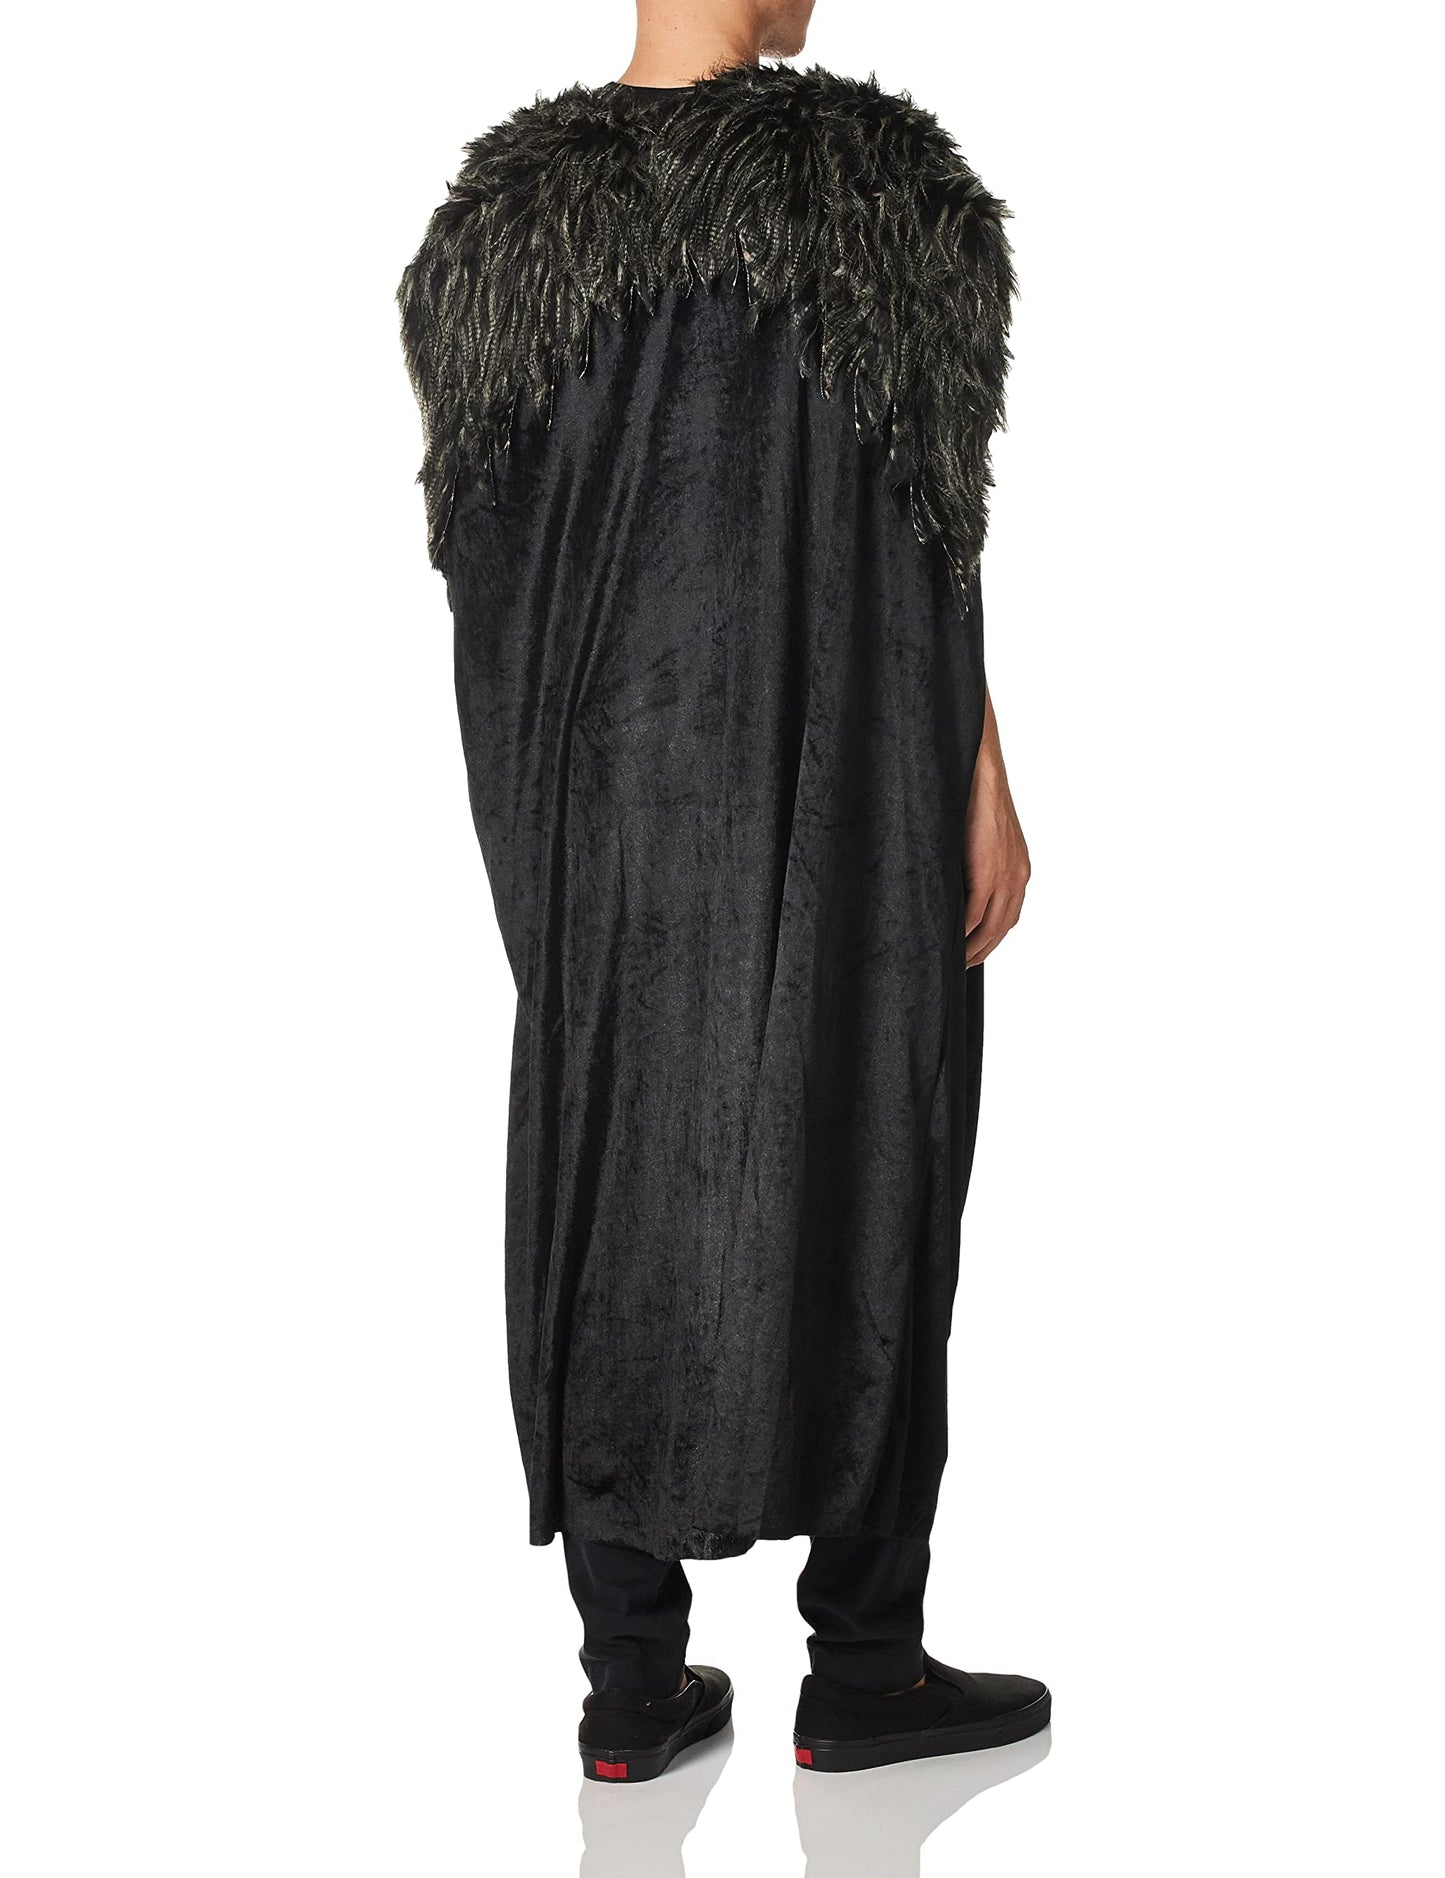 Costume Culture Men's Big Medieval Cape Adult Deluxe Standard Black